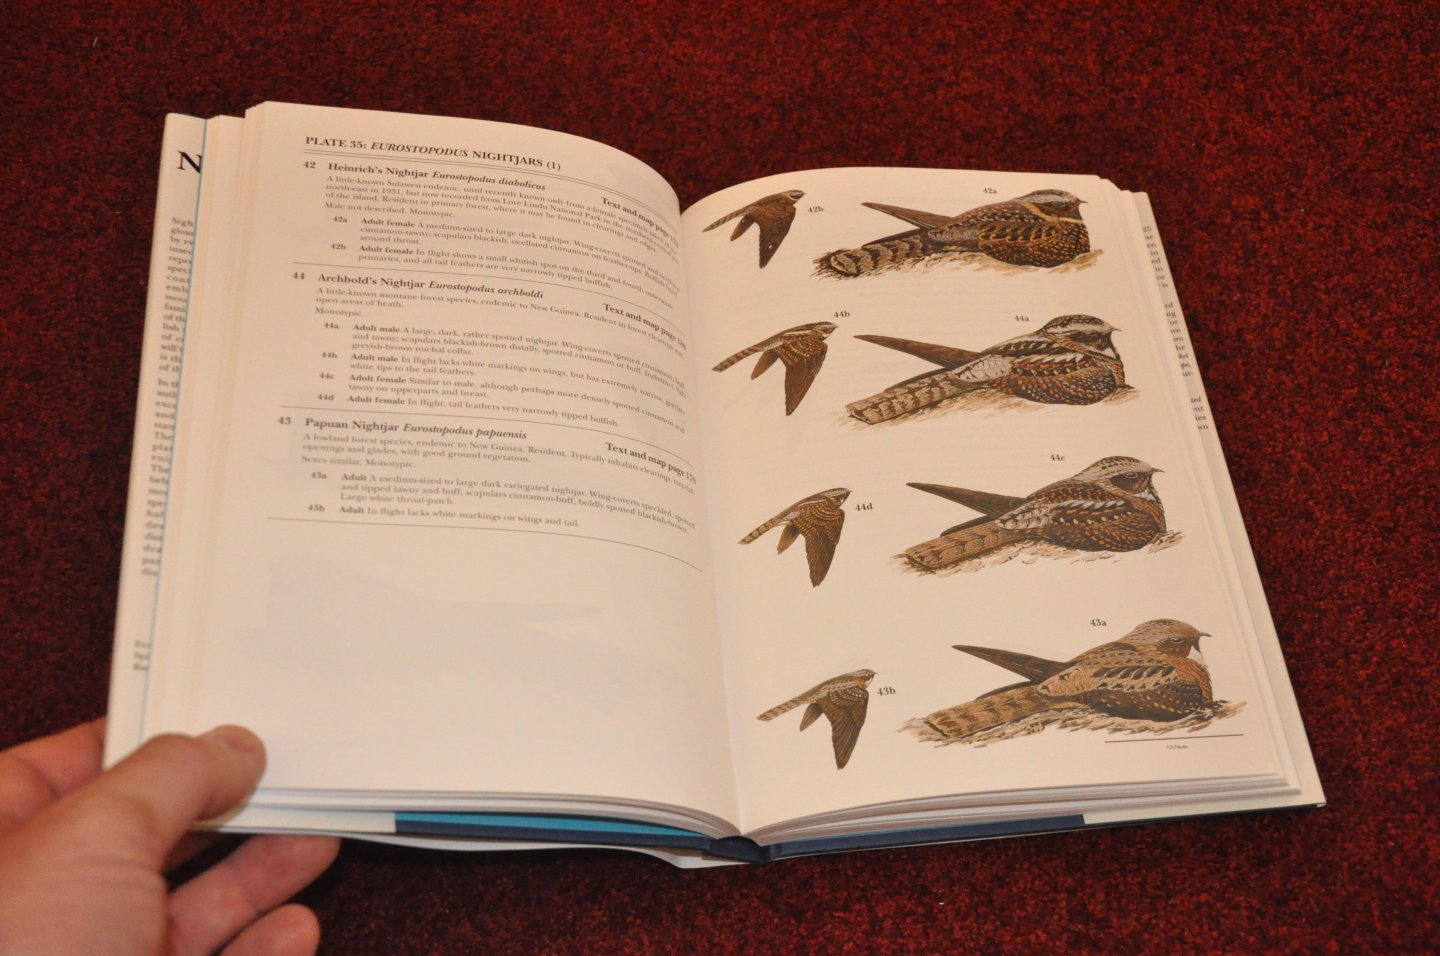 Cleere, Nigel / Nurney, Dave - Nightjars. A guide to Nightjars and Related Nightbirds